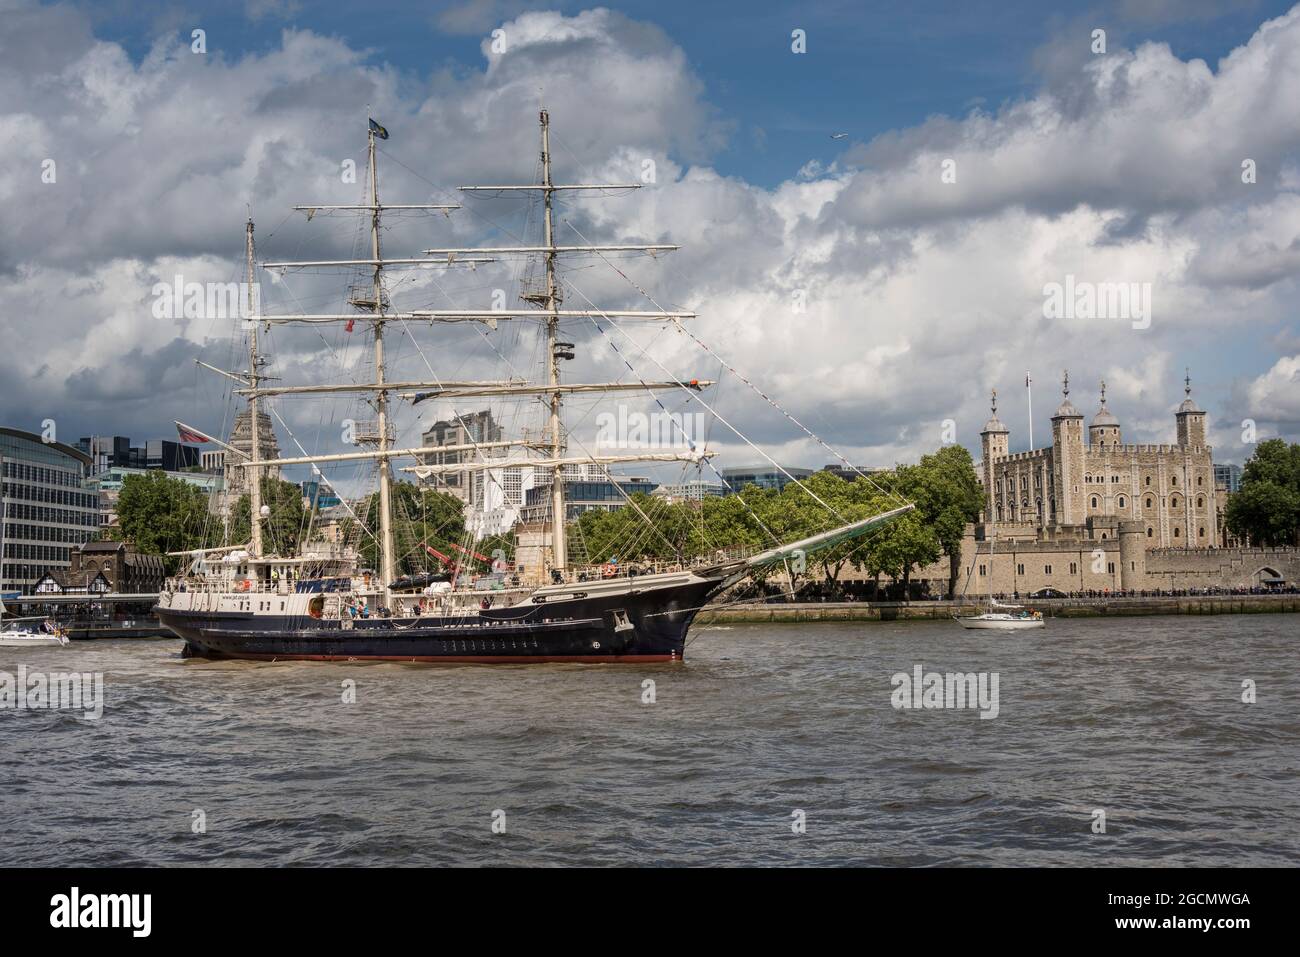 The Tenacious tall ship sailing ship passing theTower of London Stock Photo